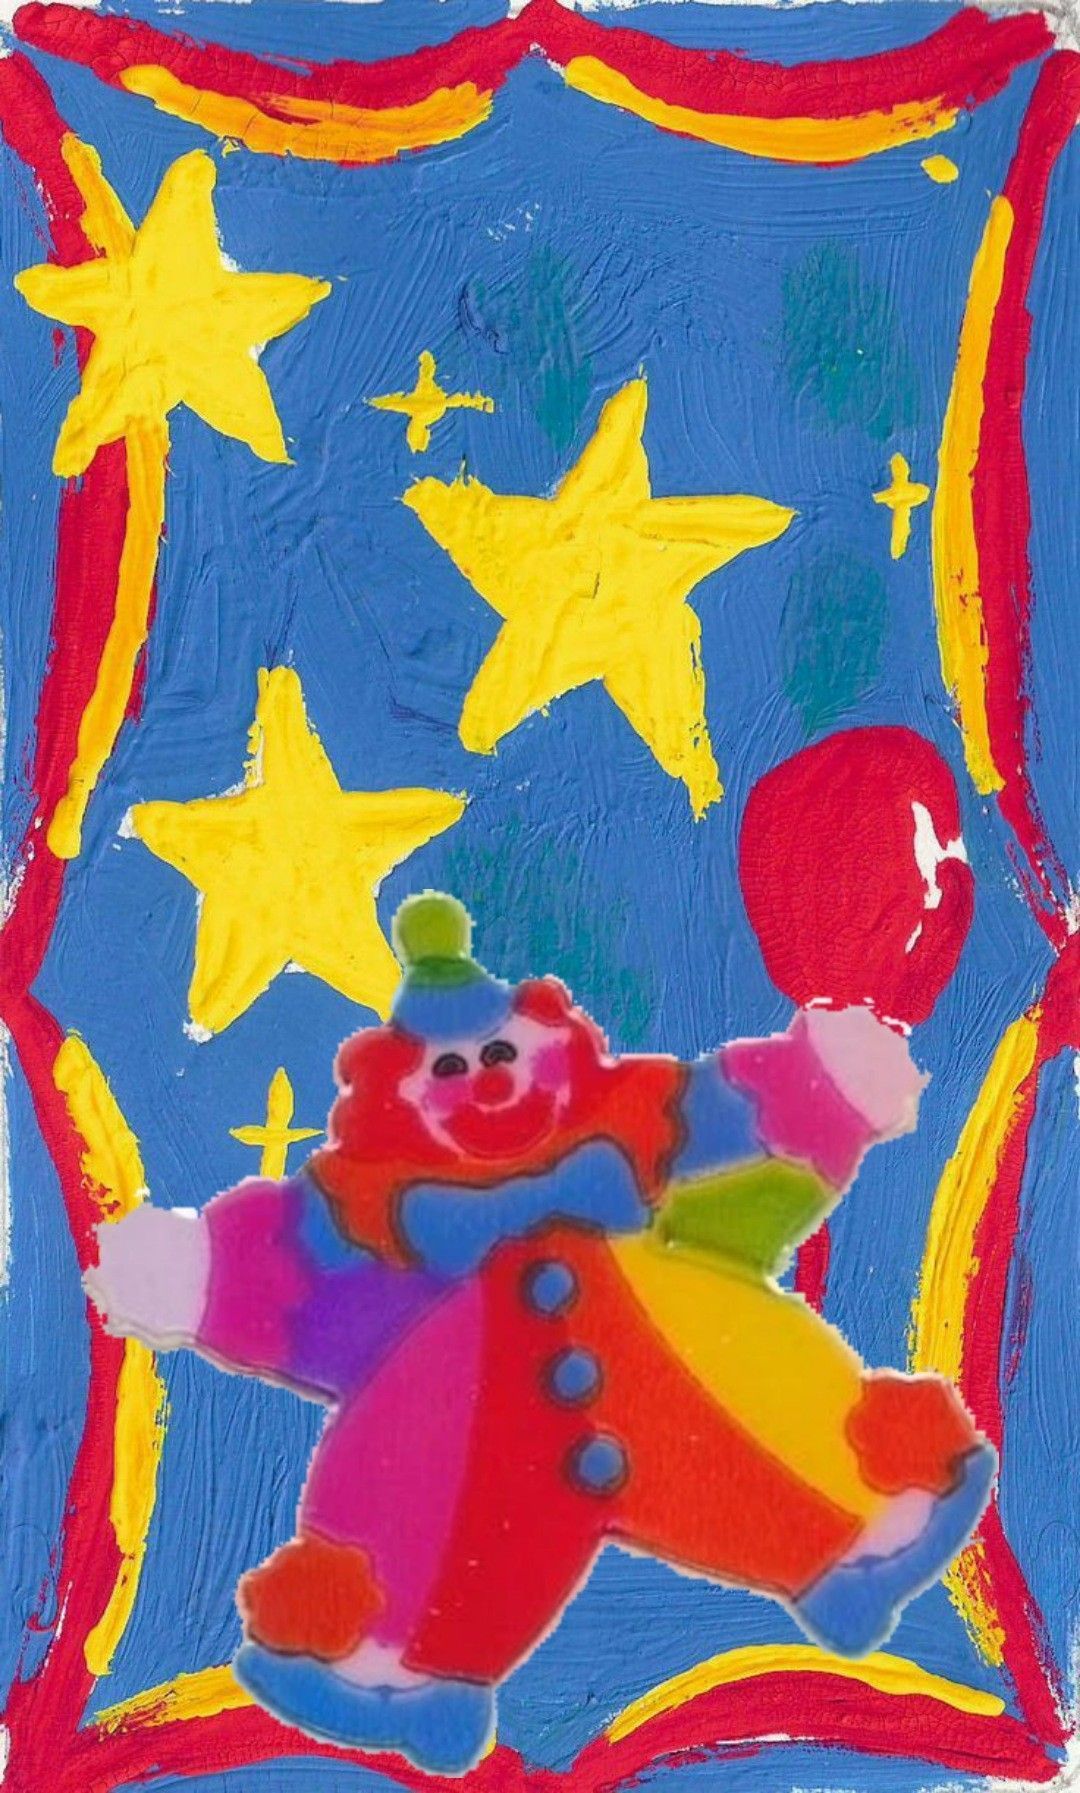 clowncore wallpaper. Clowncore wallpaper, Cute clown, Cute wallpaper